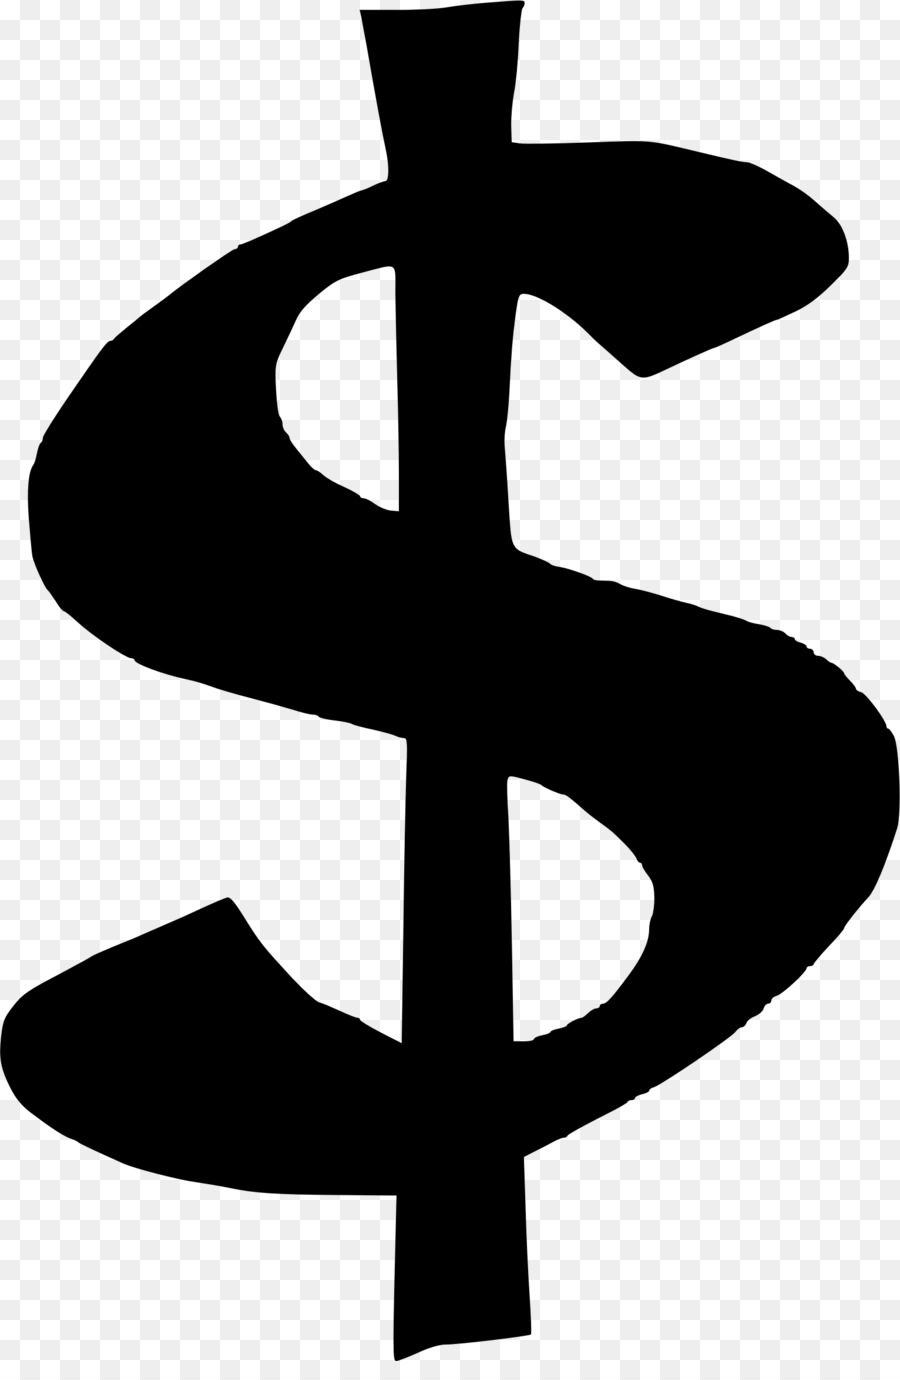 Dollar sign Currency symbol Money Clip art - dollar sign png download - 1532*2316 - Free Transparent Dollar Sign png Download.